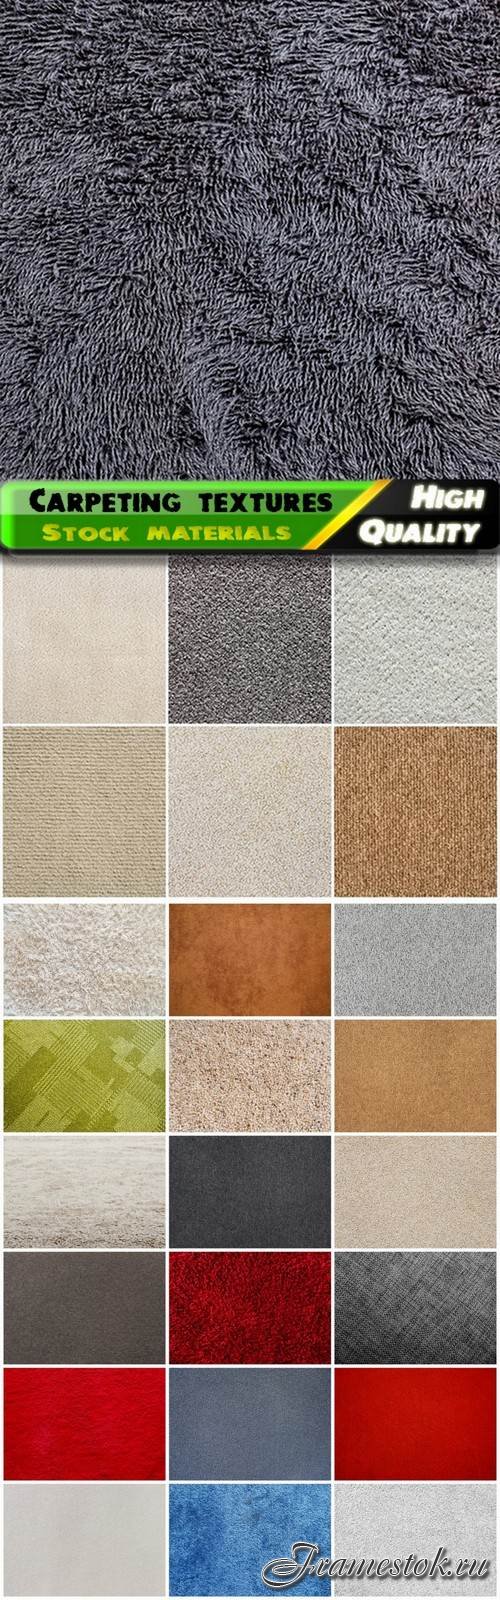 Floor carpet and carpeting textures - 25 HQ Jpg